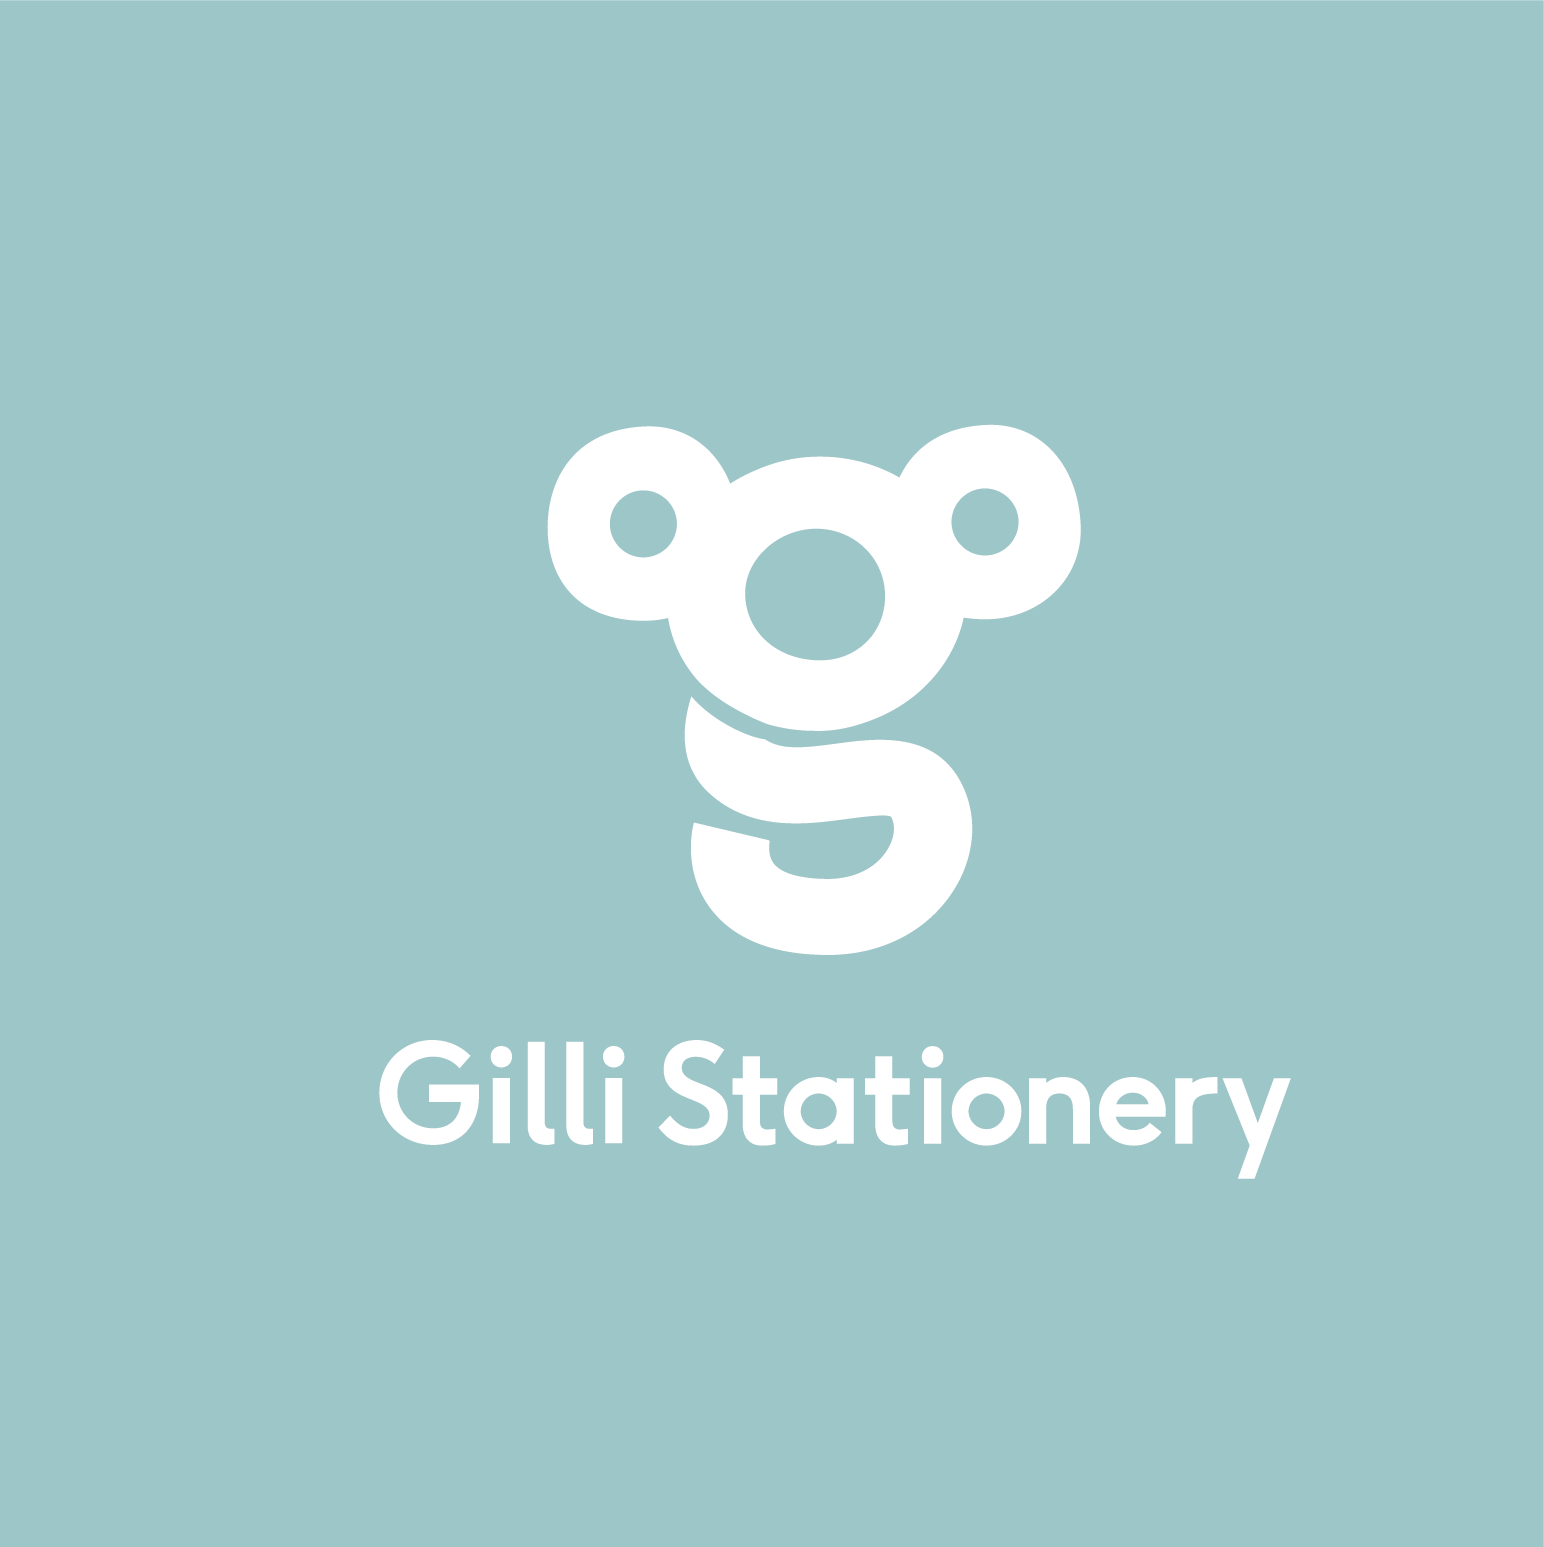 gilli stationery logo - WOMAD